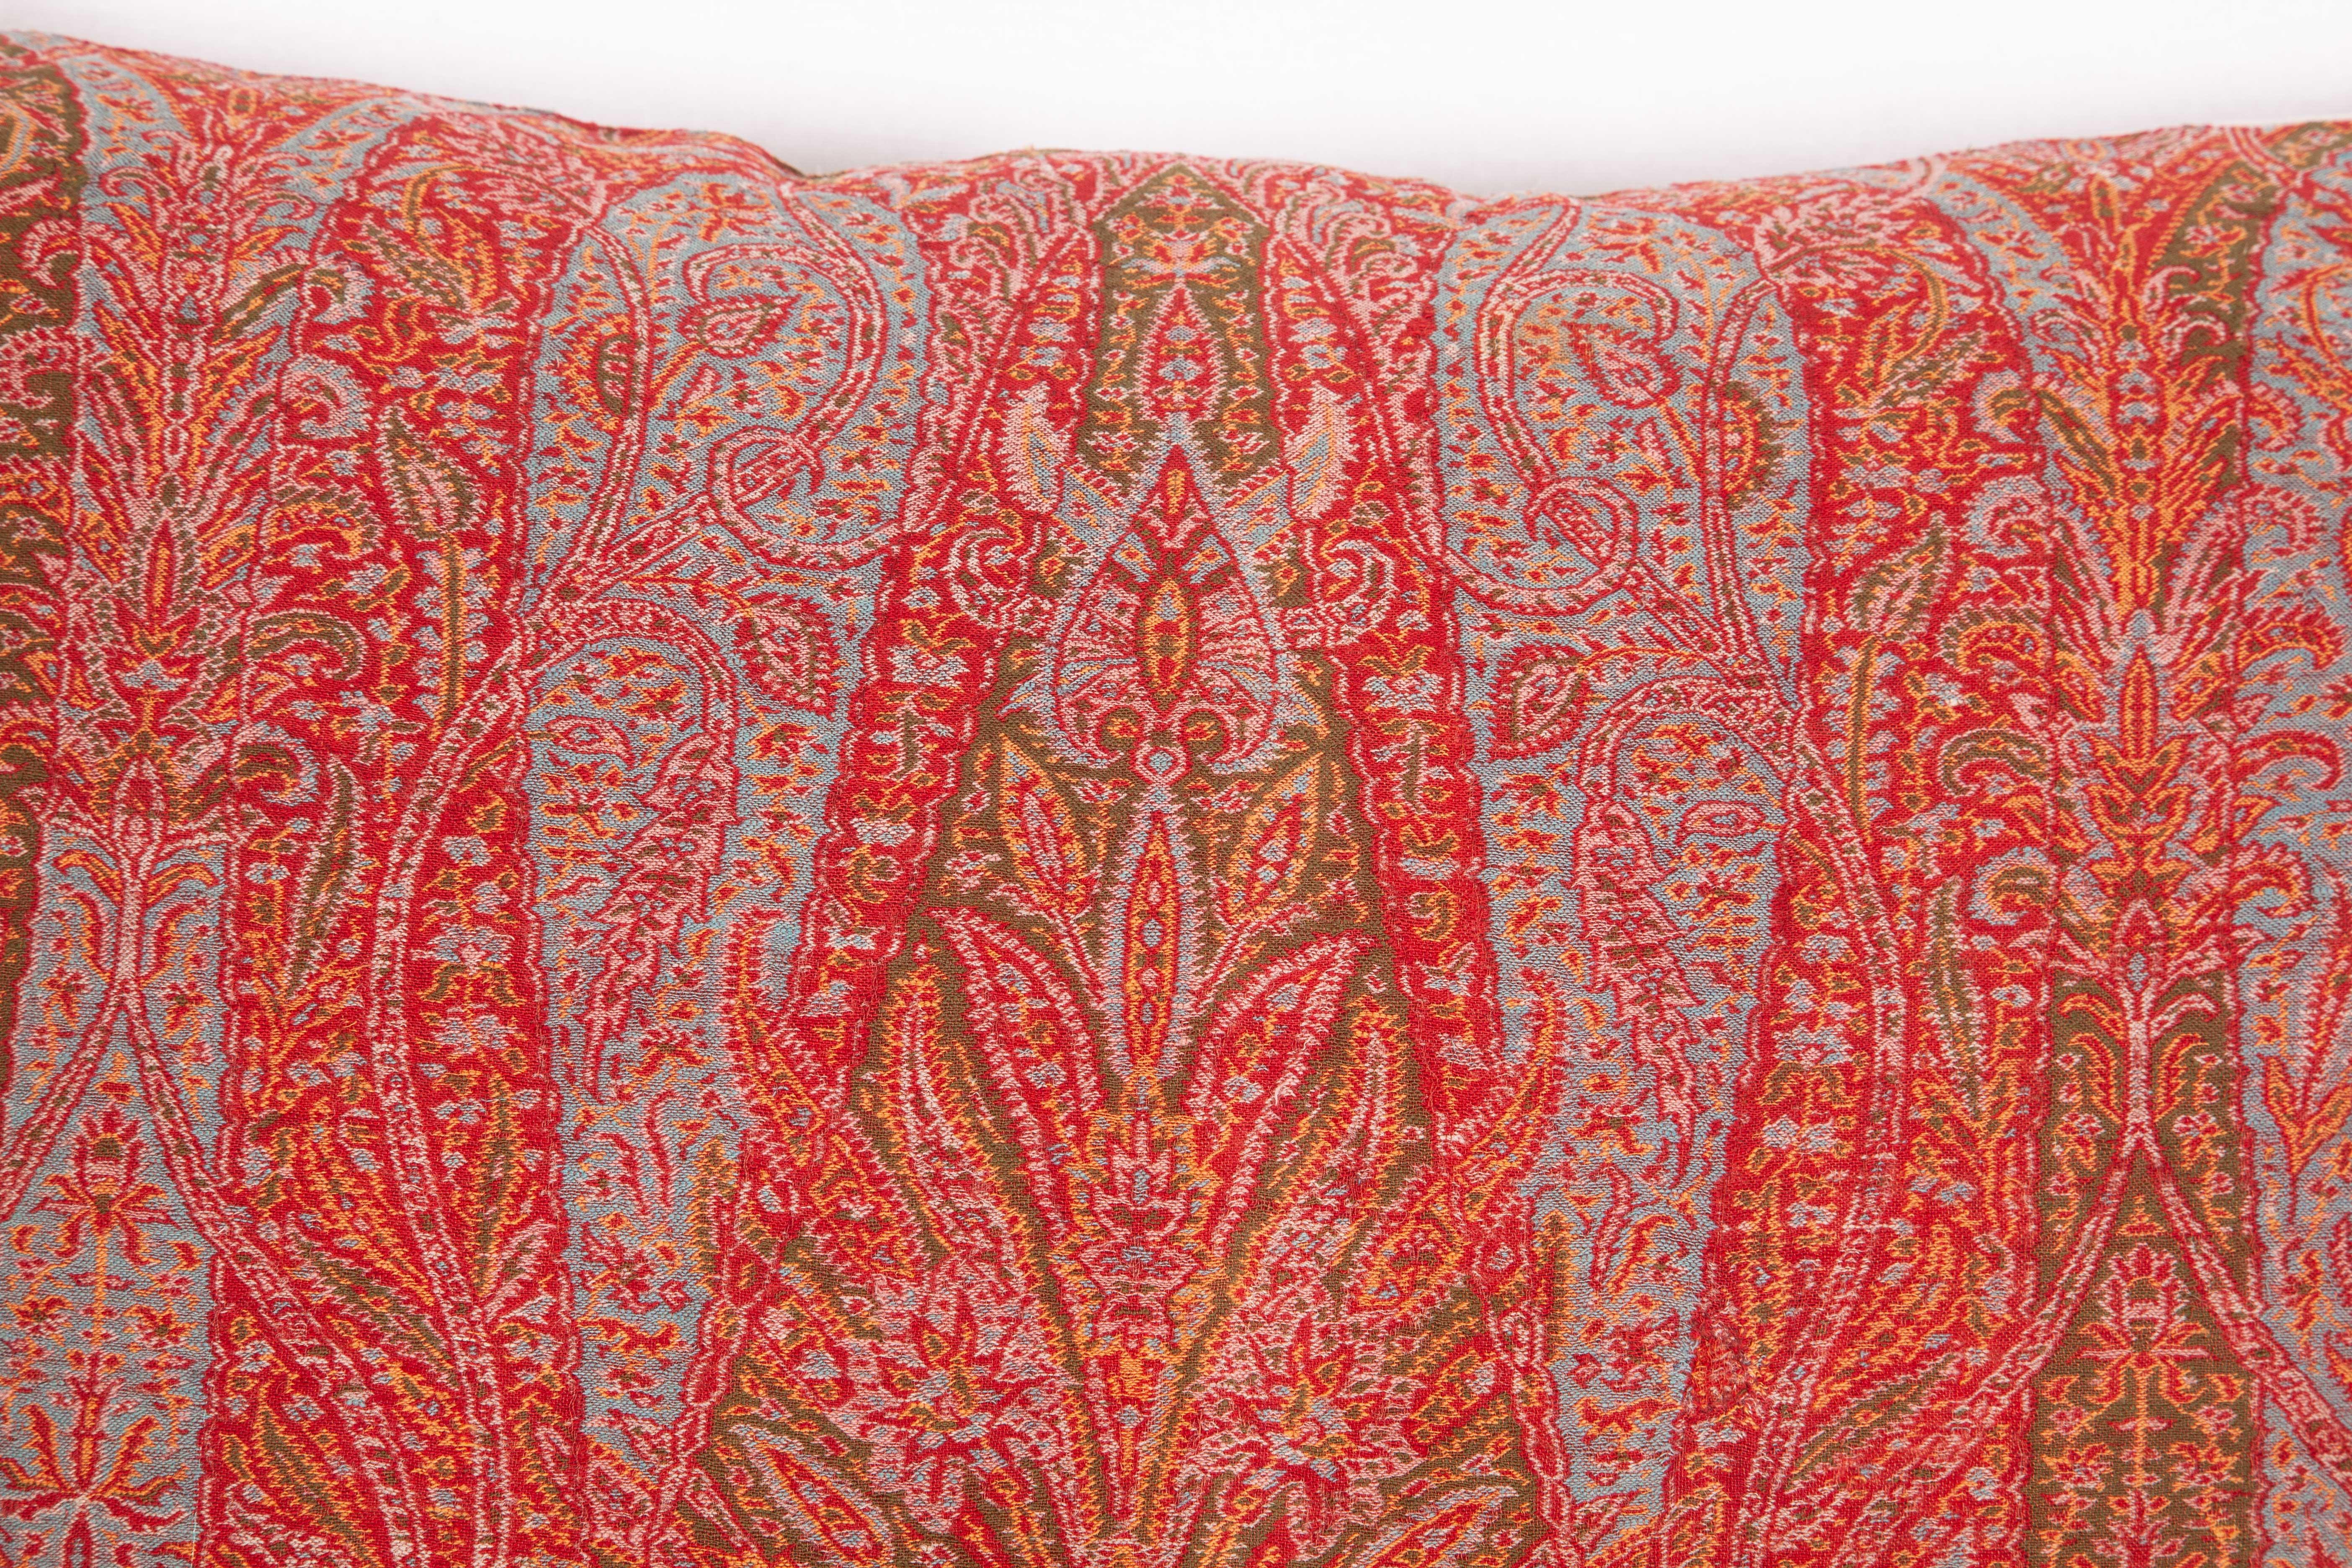 Woven 19th Century European Paisley Wool Pillow